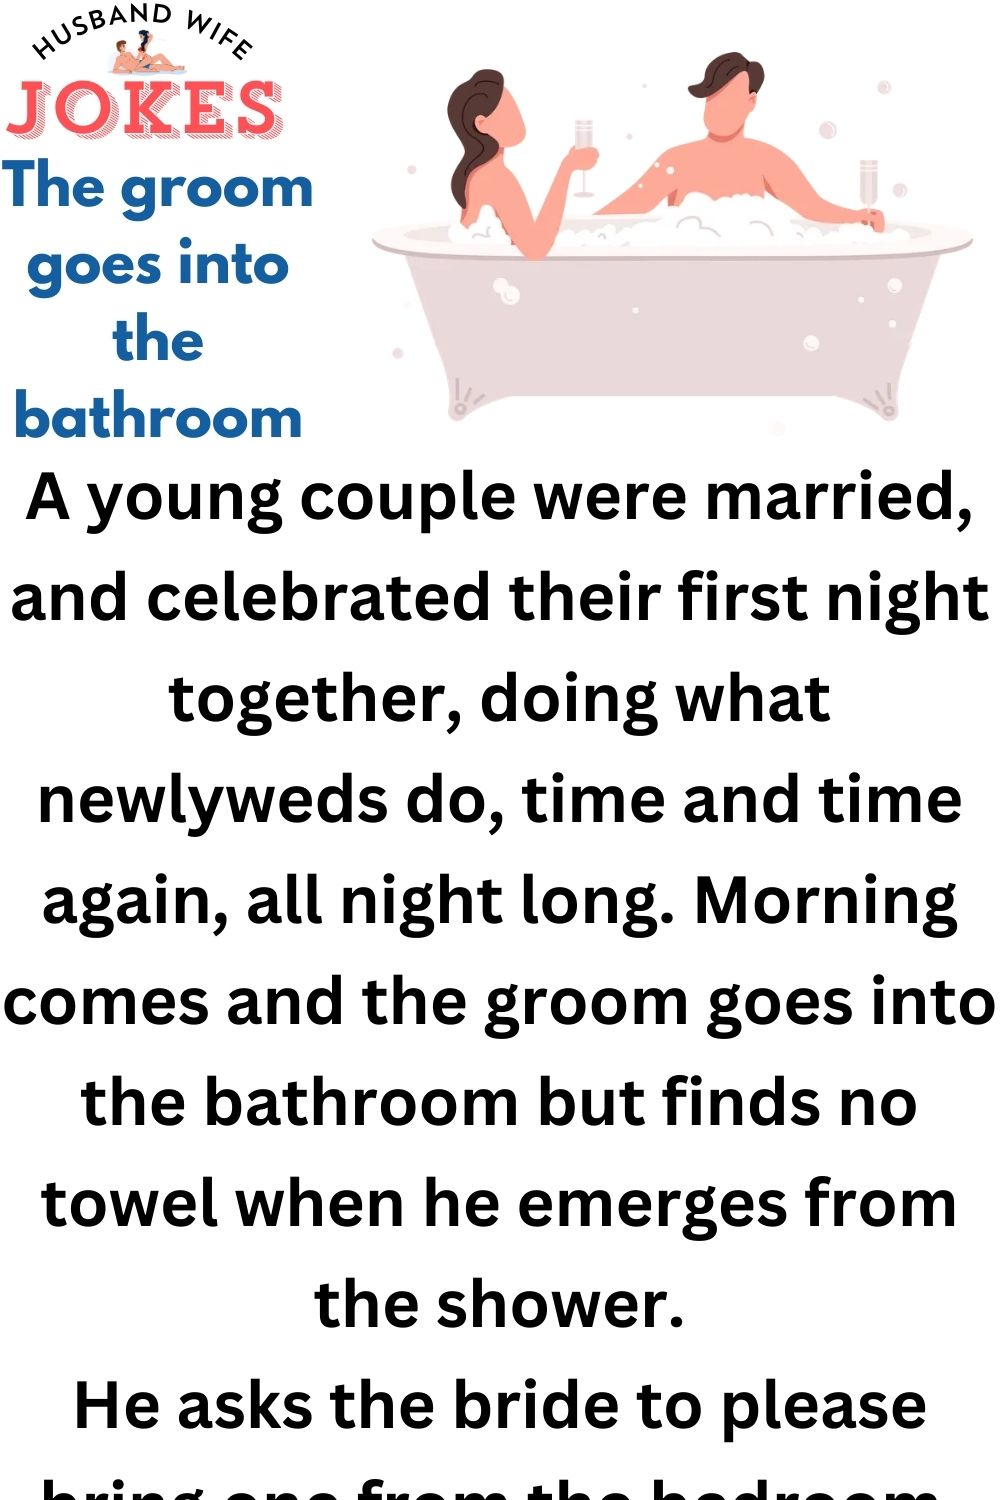 The groom goes into the bathroom